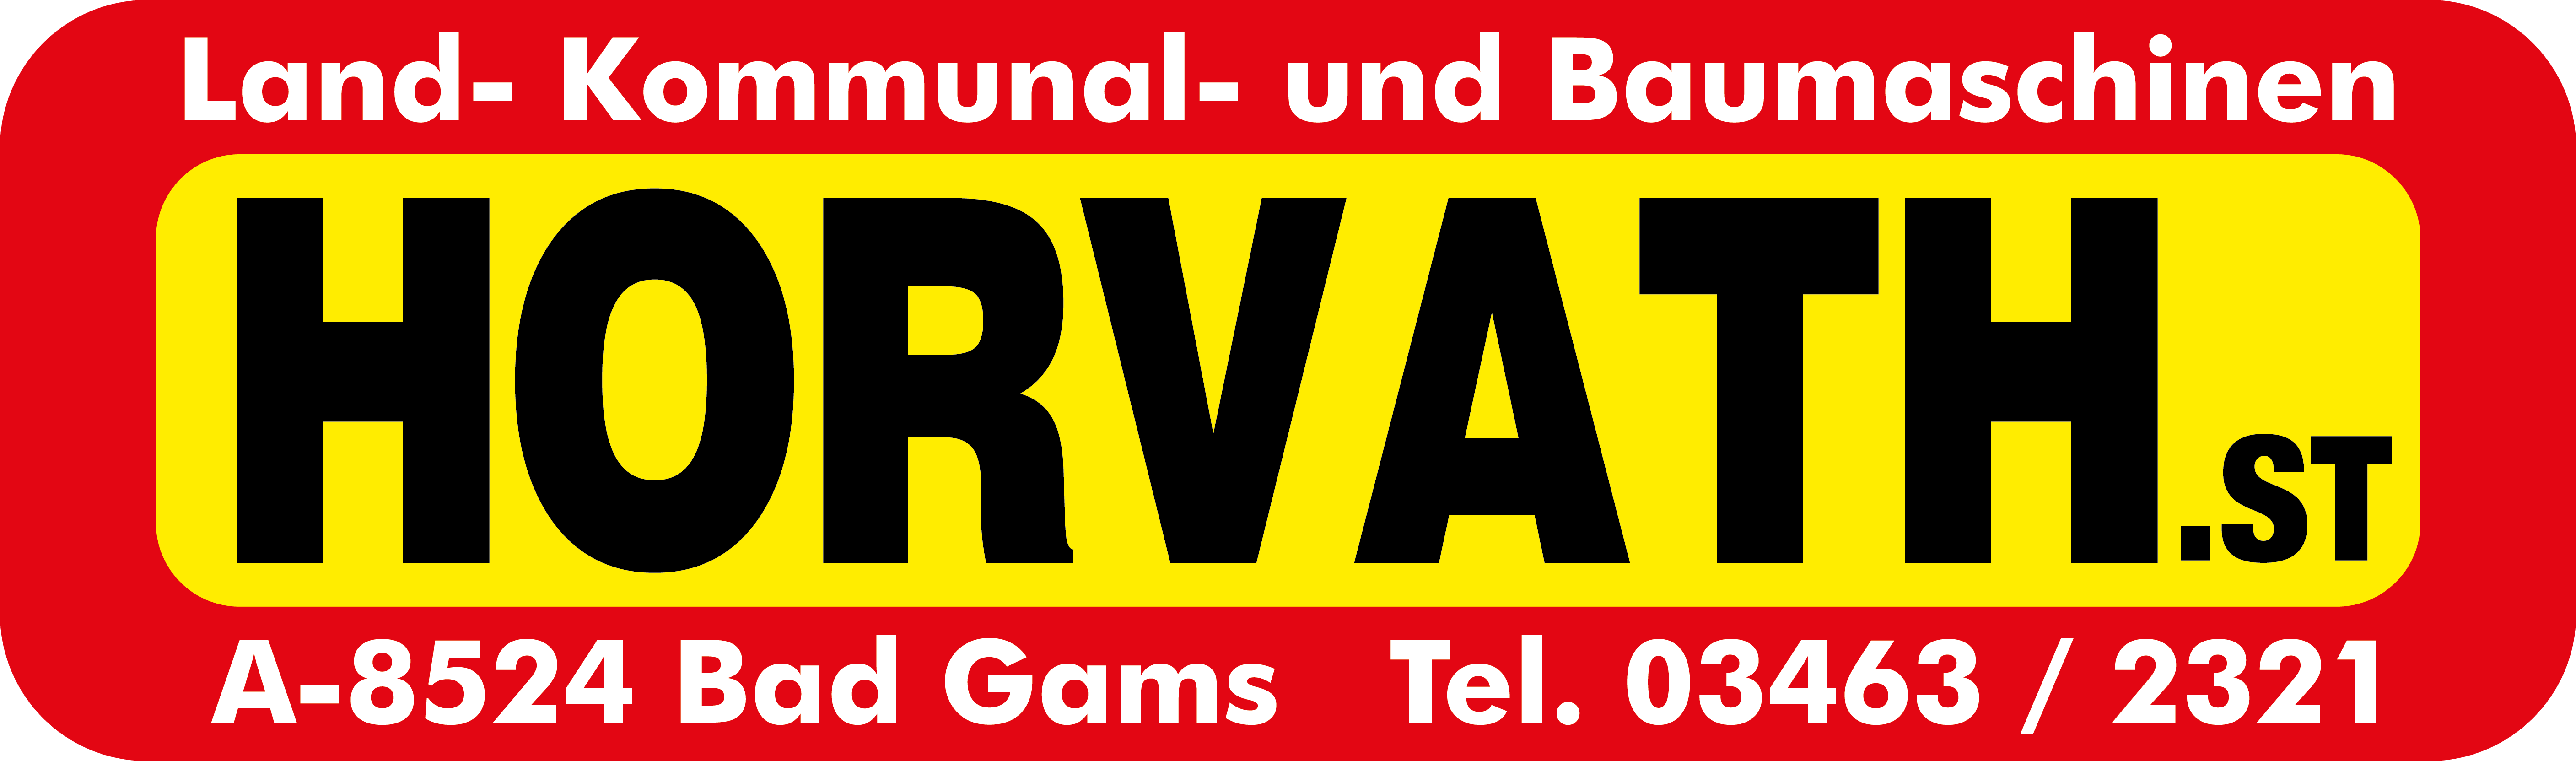 horvath-logo-5630x1663px